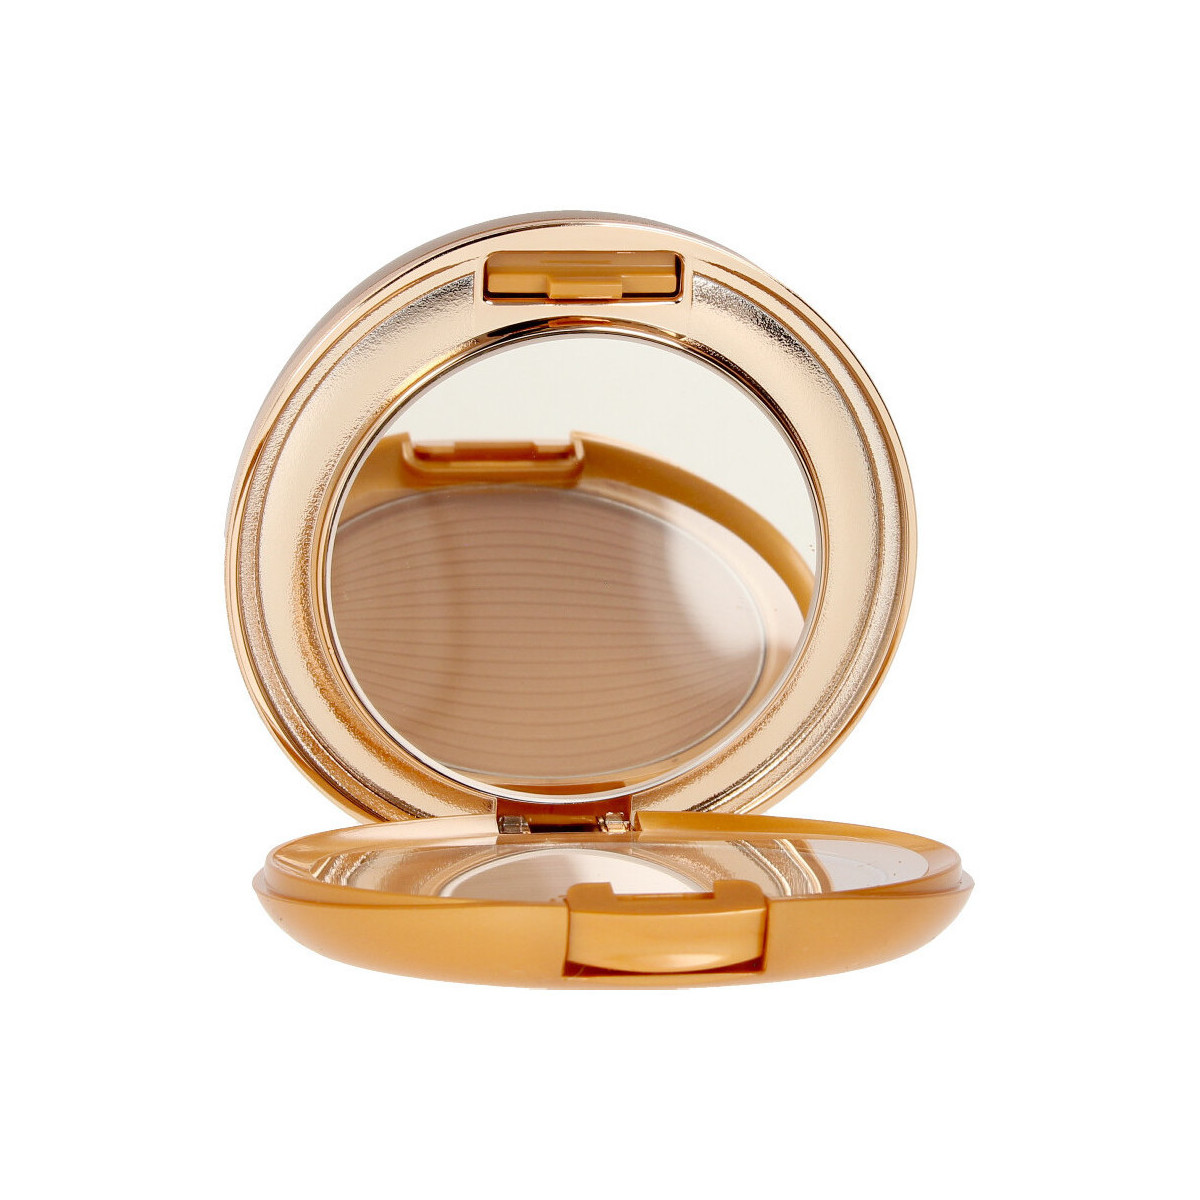 Beauty Make-up & Foundation  Sensai Silky Bronze Sun Protective Compact sc03 